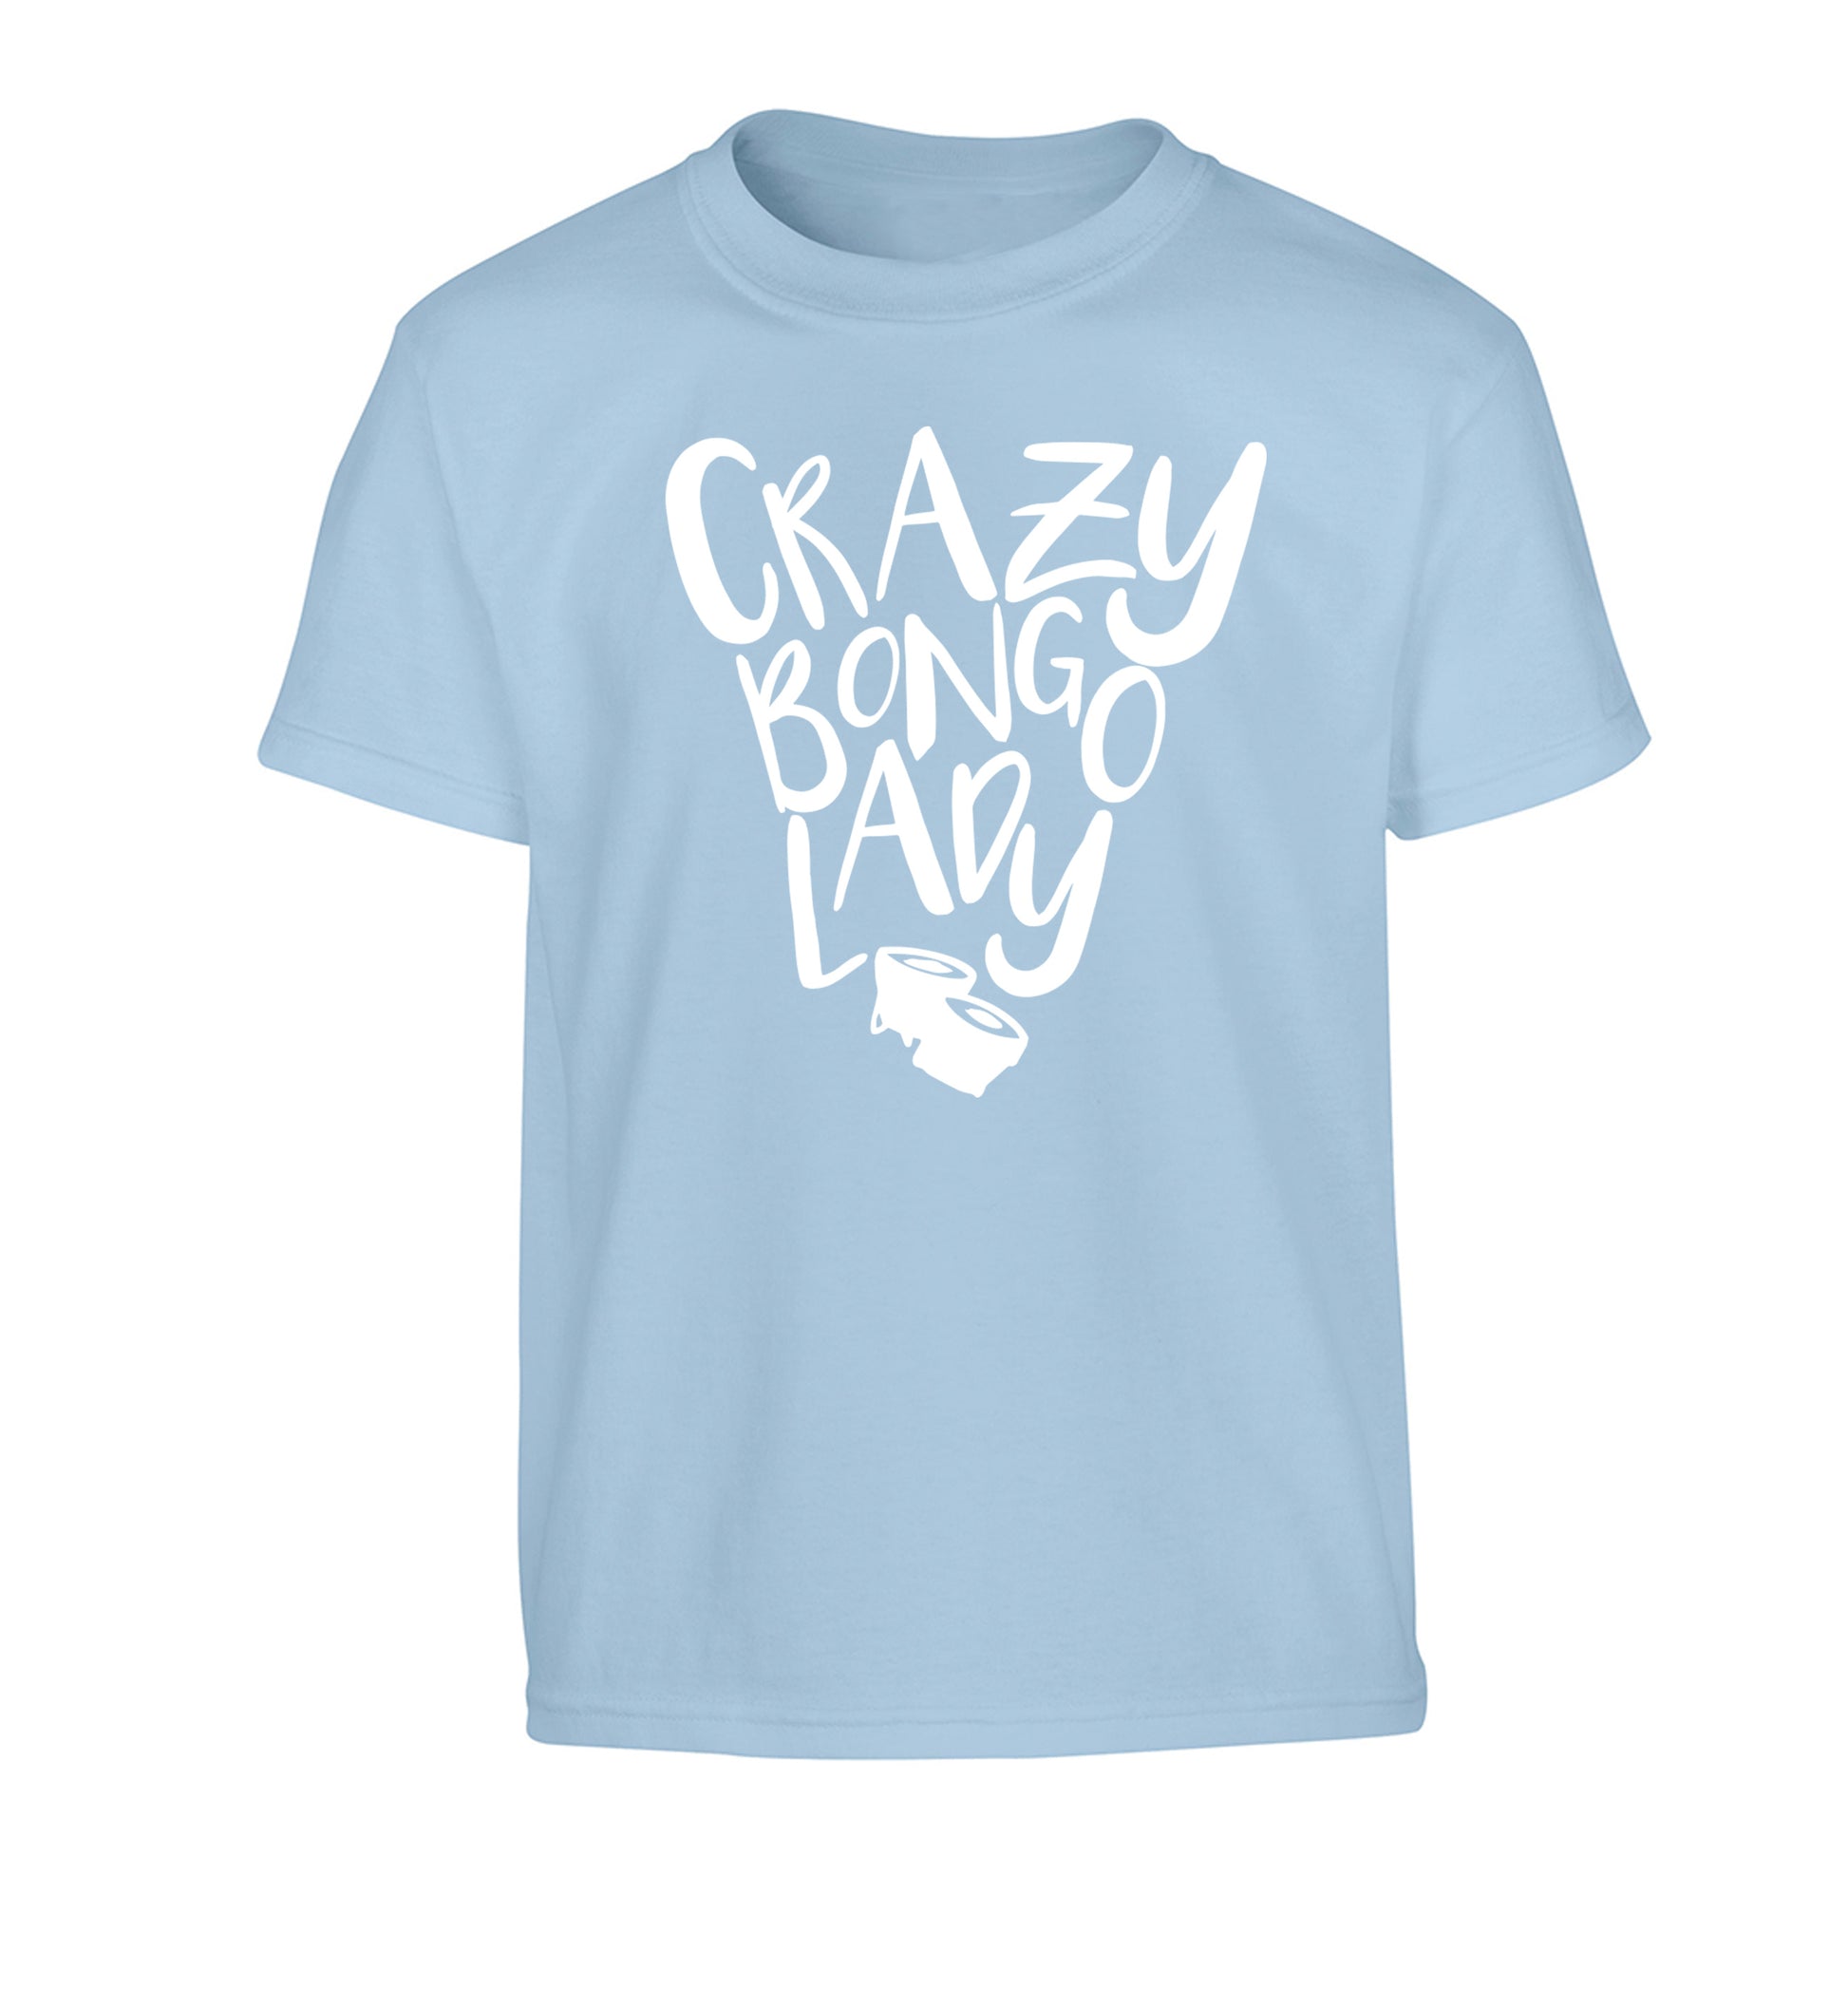 Crazy bongo lady Children's light blue Tshirt 12-14 Years